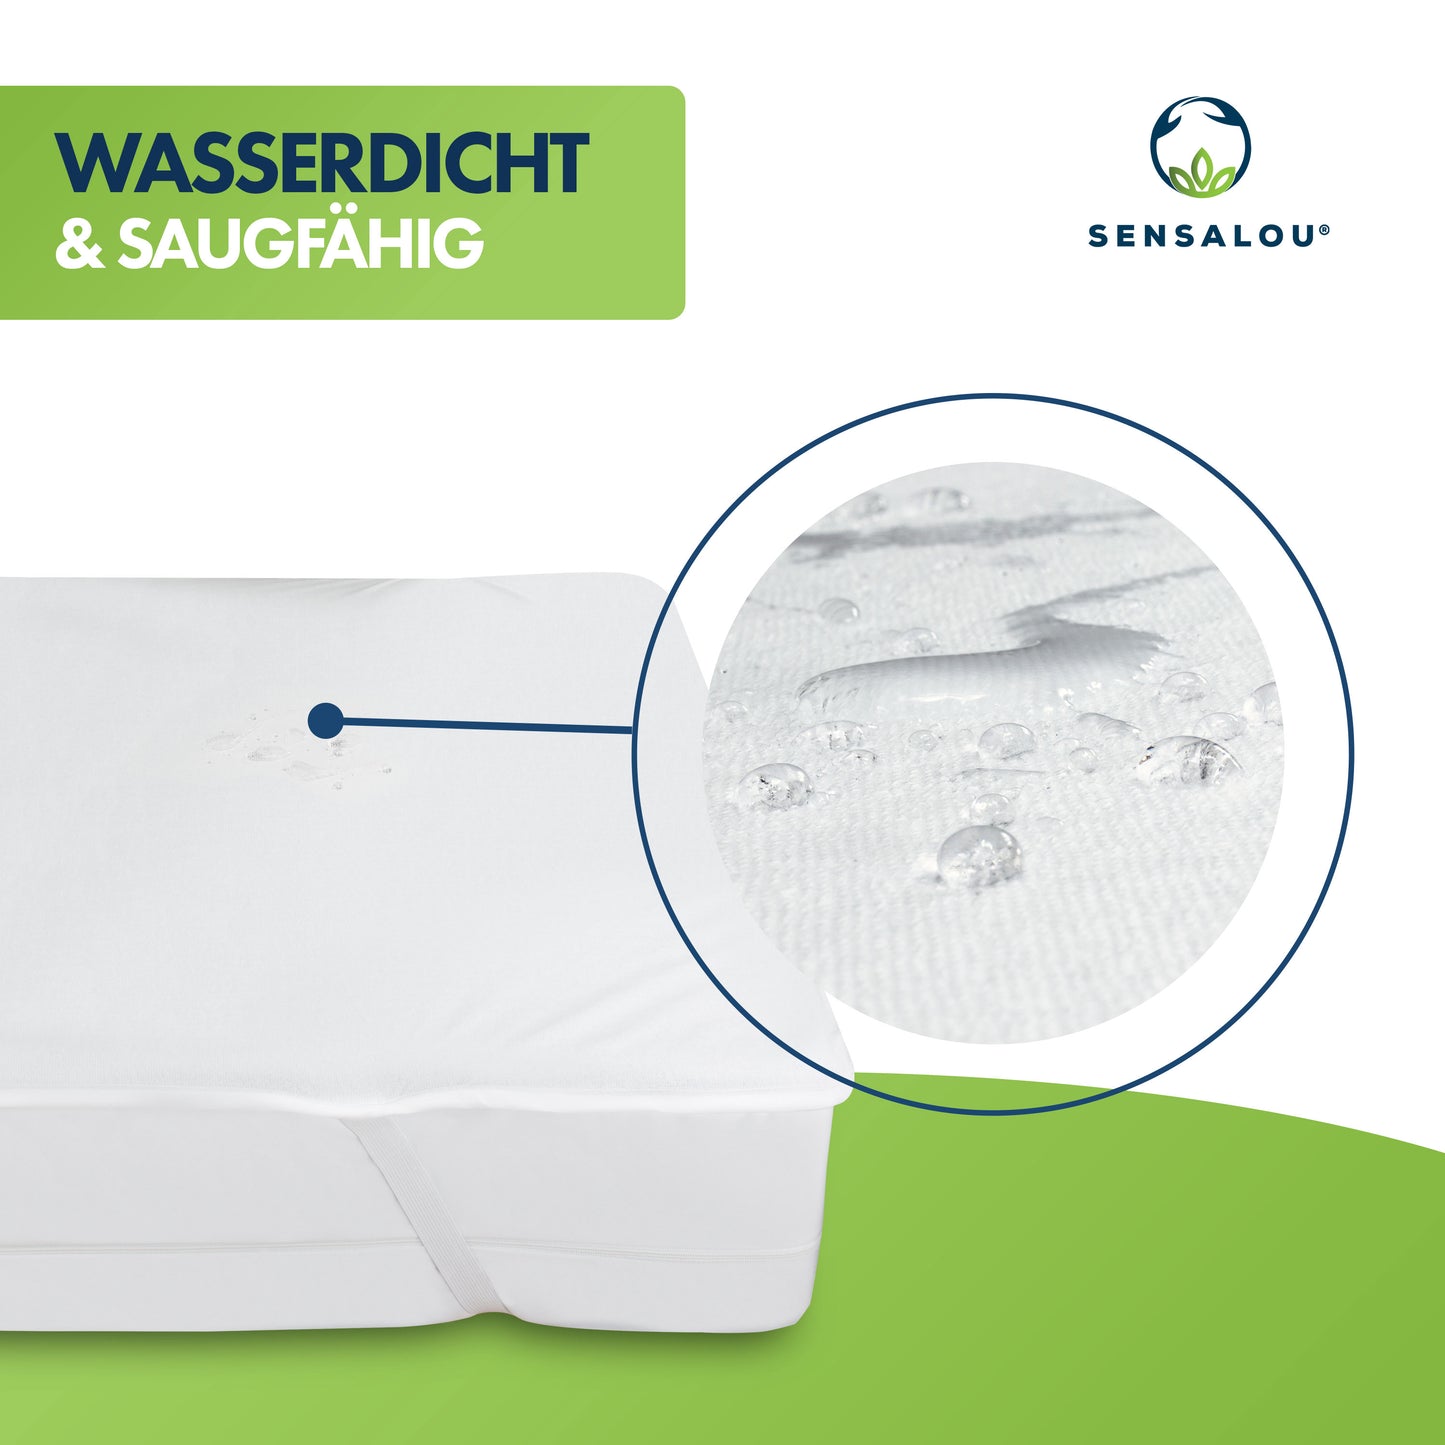 Sensalou waterproof mattress protector